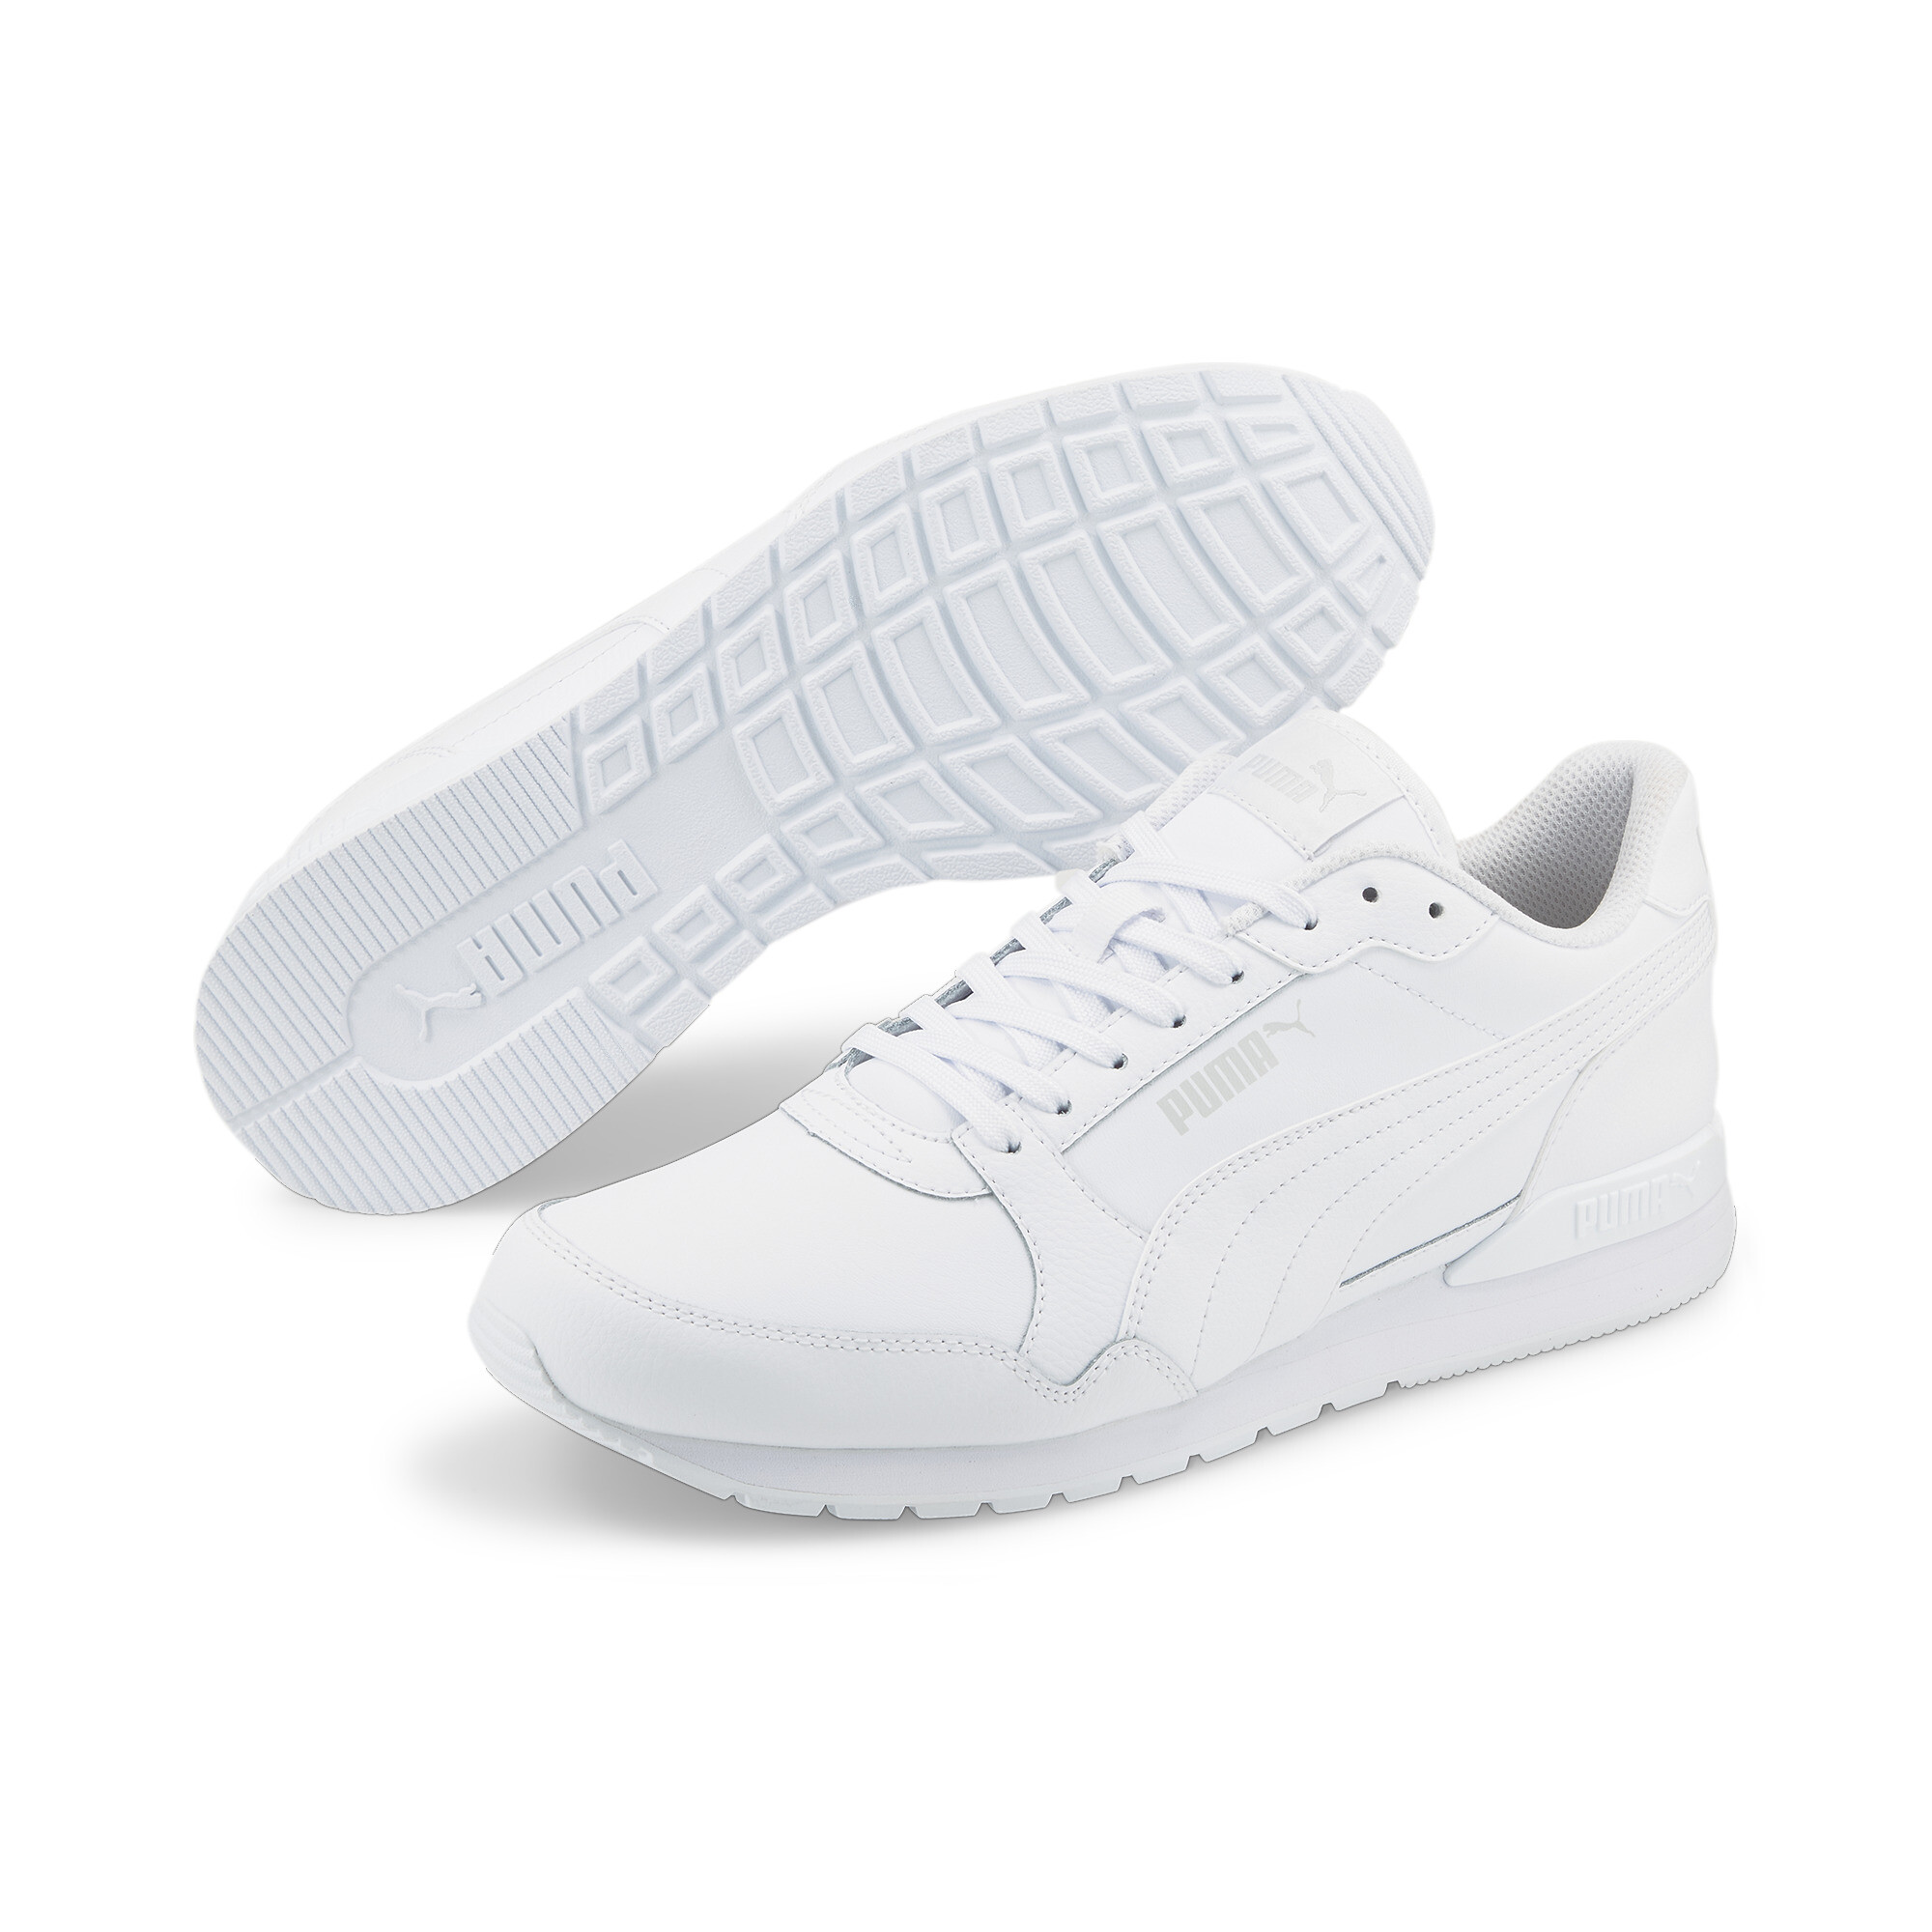 Puma ST Runner V3 L Trainers, White, Size 46, Shoes